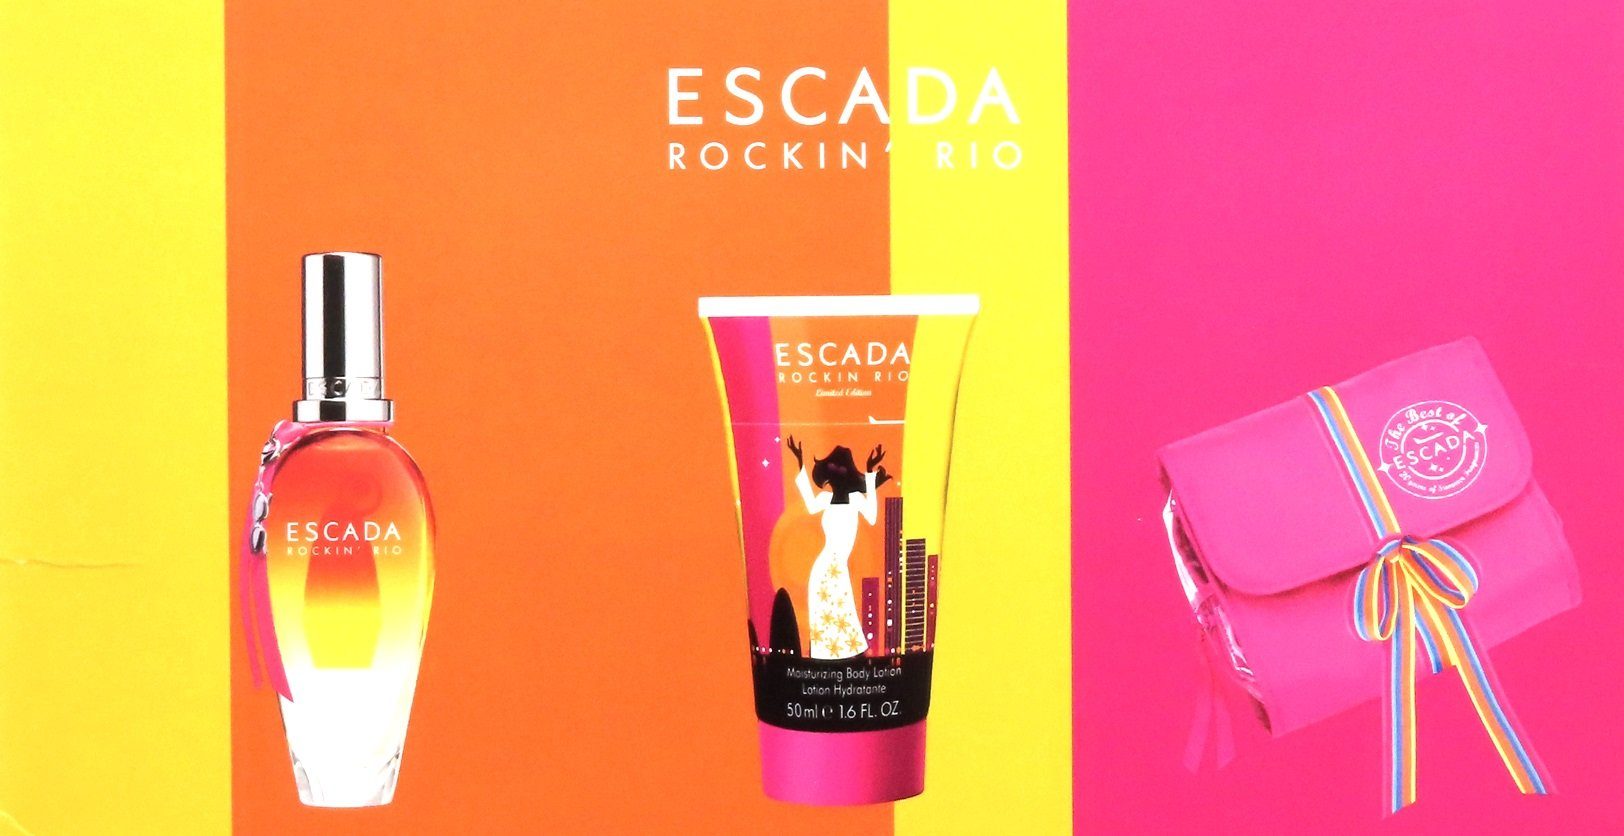 Beauty + Spray lotion de Eau body 50ml Escada ESCADA Edt ROCKIN + RIO Pouch 50ml Toilette